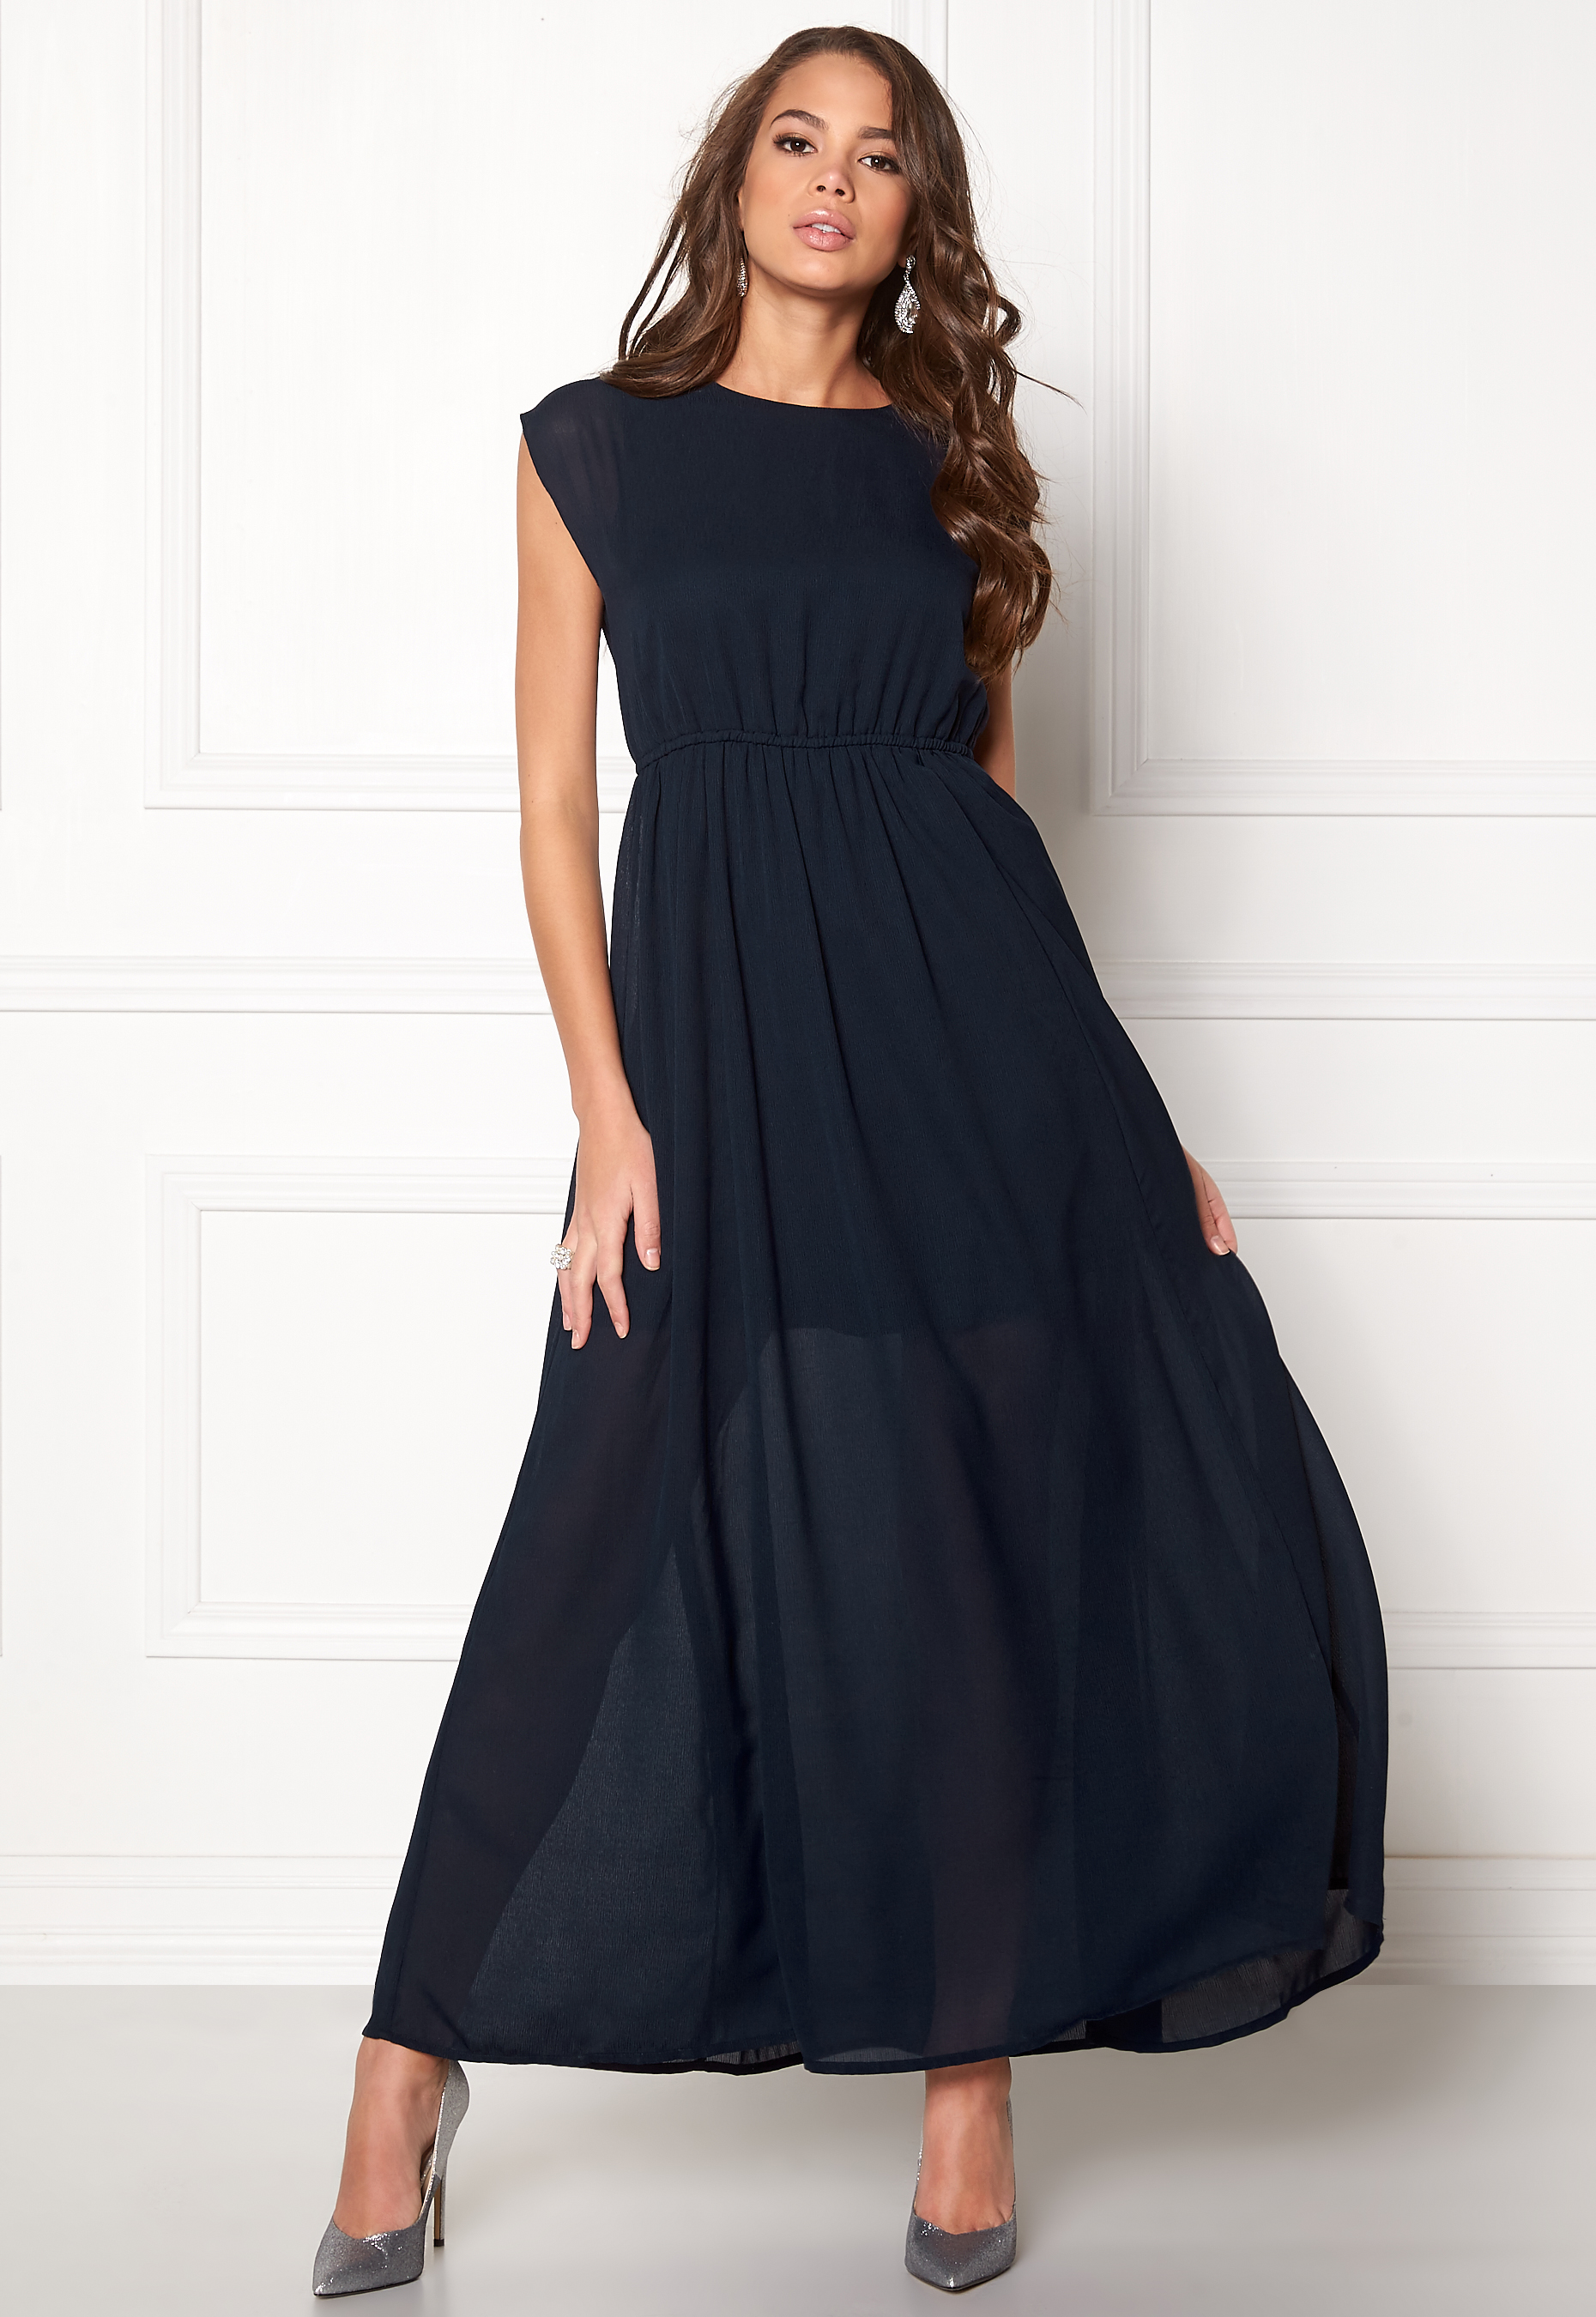 vero moda navy blue dress